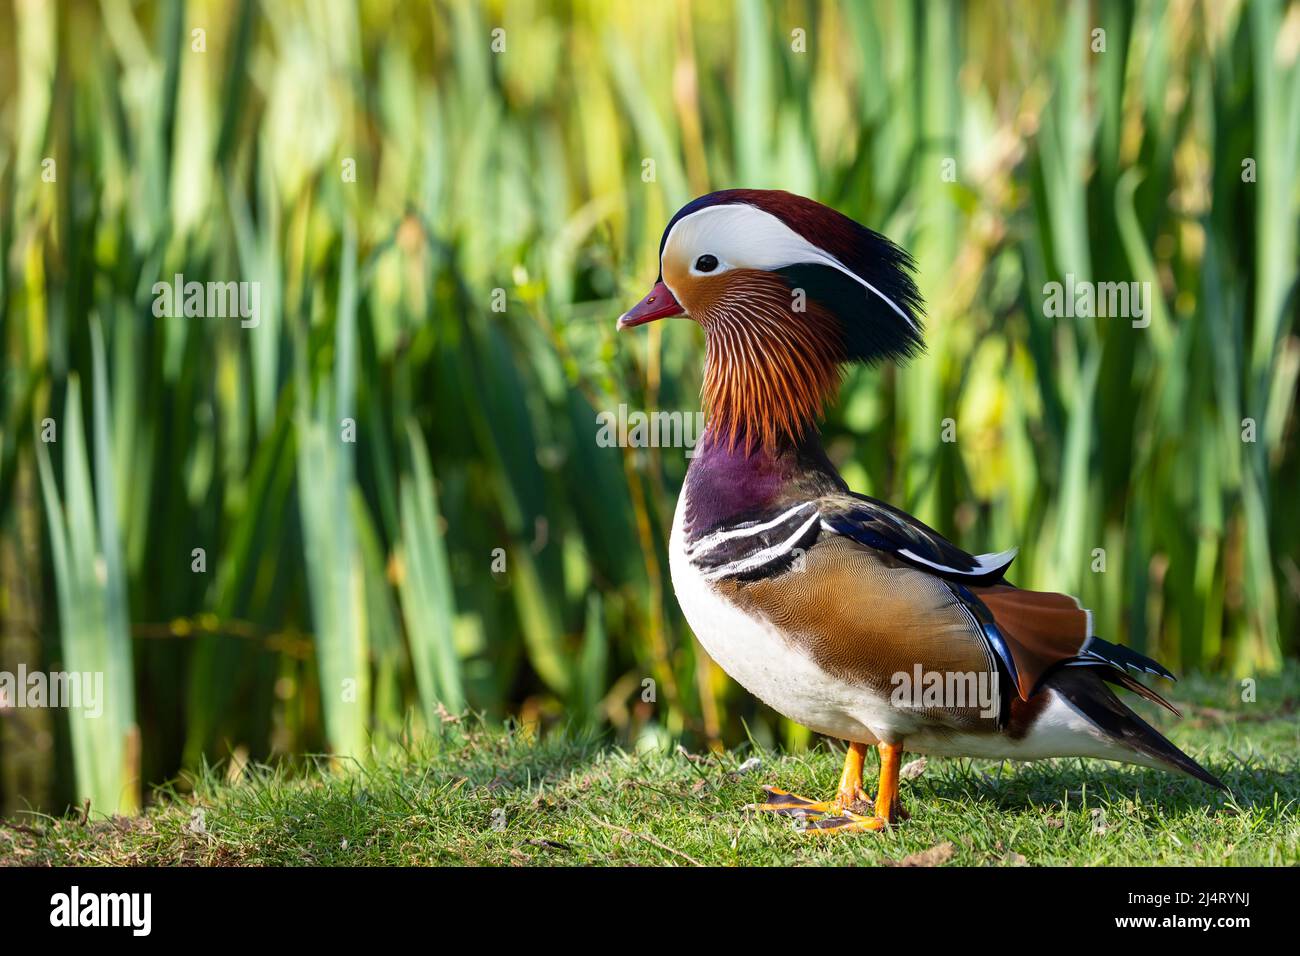 Aix galericulata, mandarin duck sitting by the lake Stock Photo